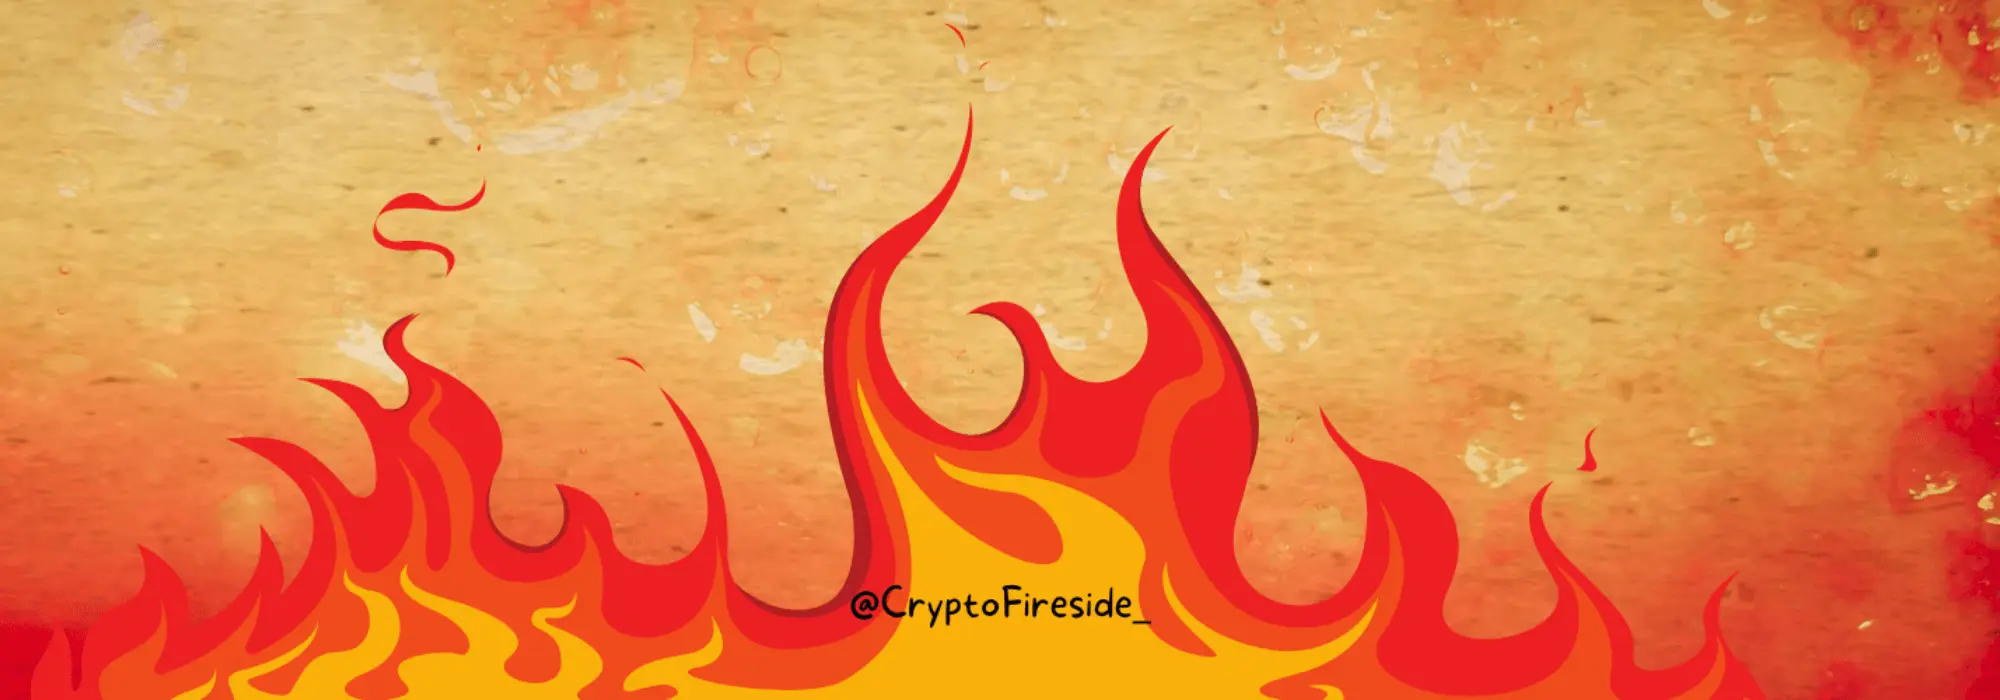 Crypto Fireside